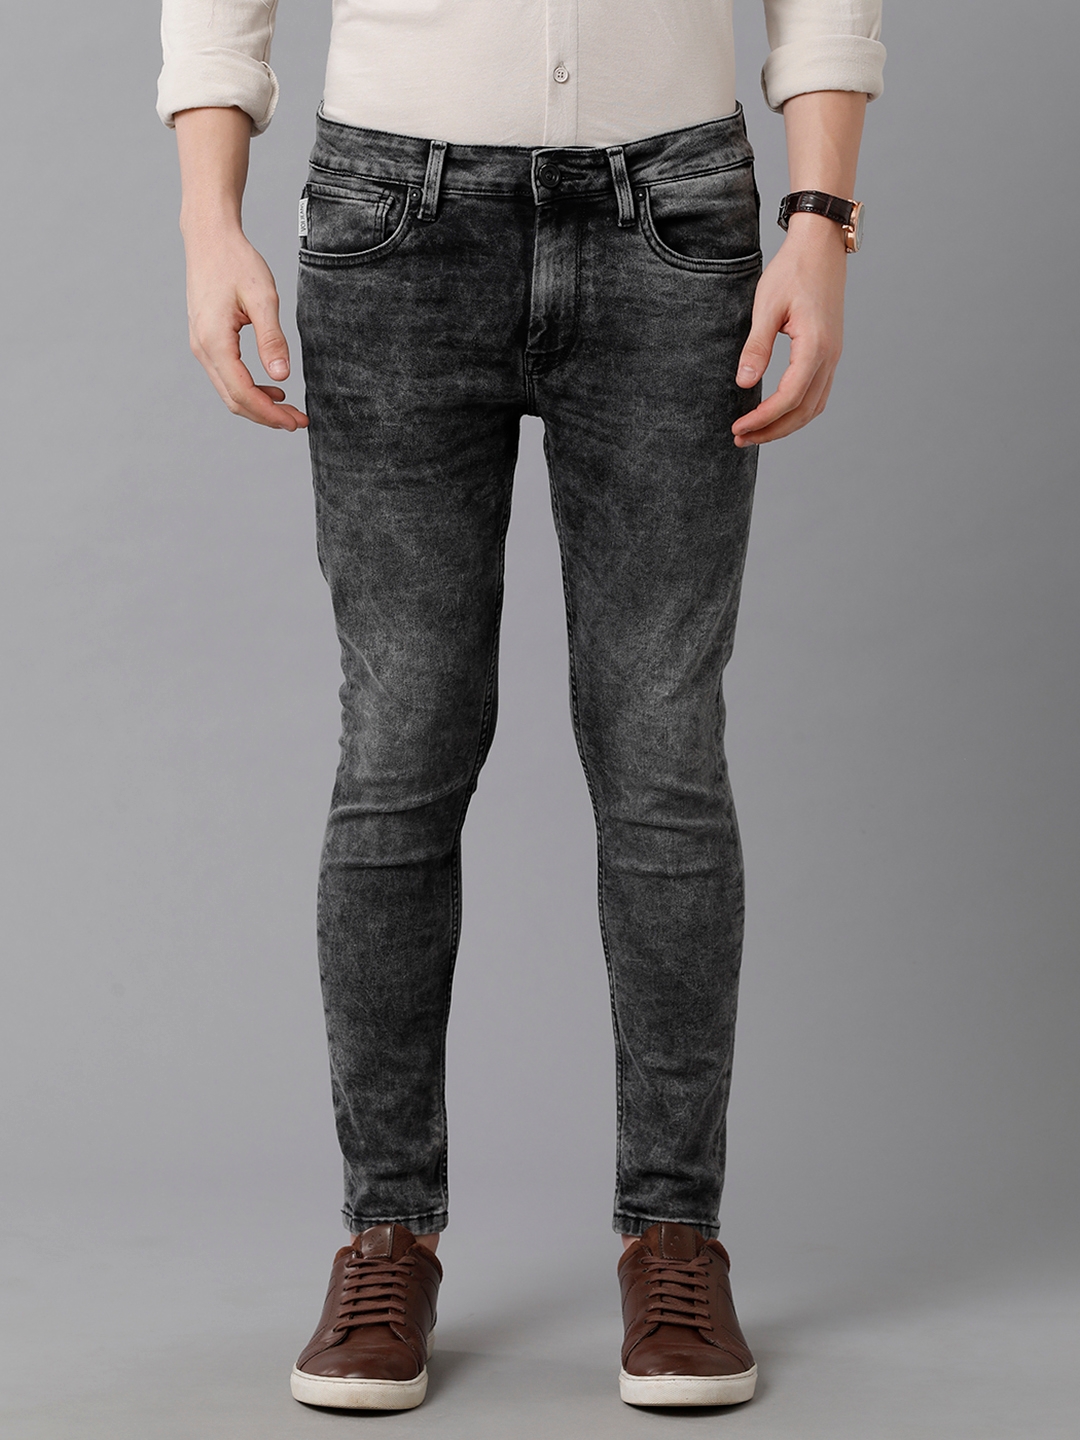 VOI JEANS Men's Solid Black Faded Cotton Blend Mid Rise Slim Fit Jeans